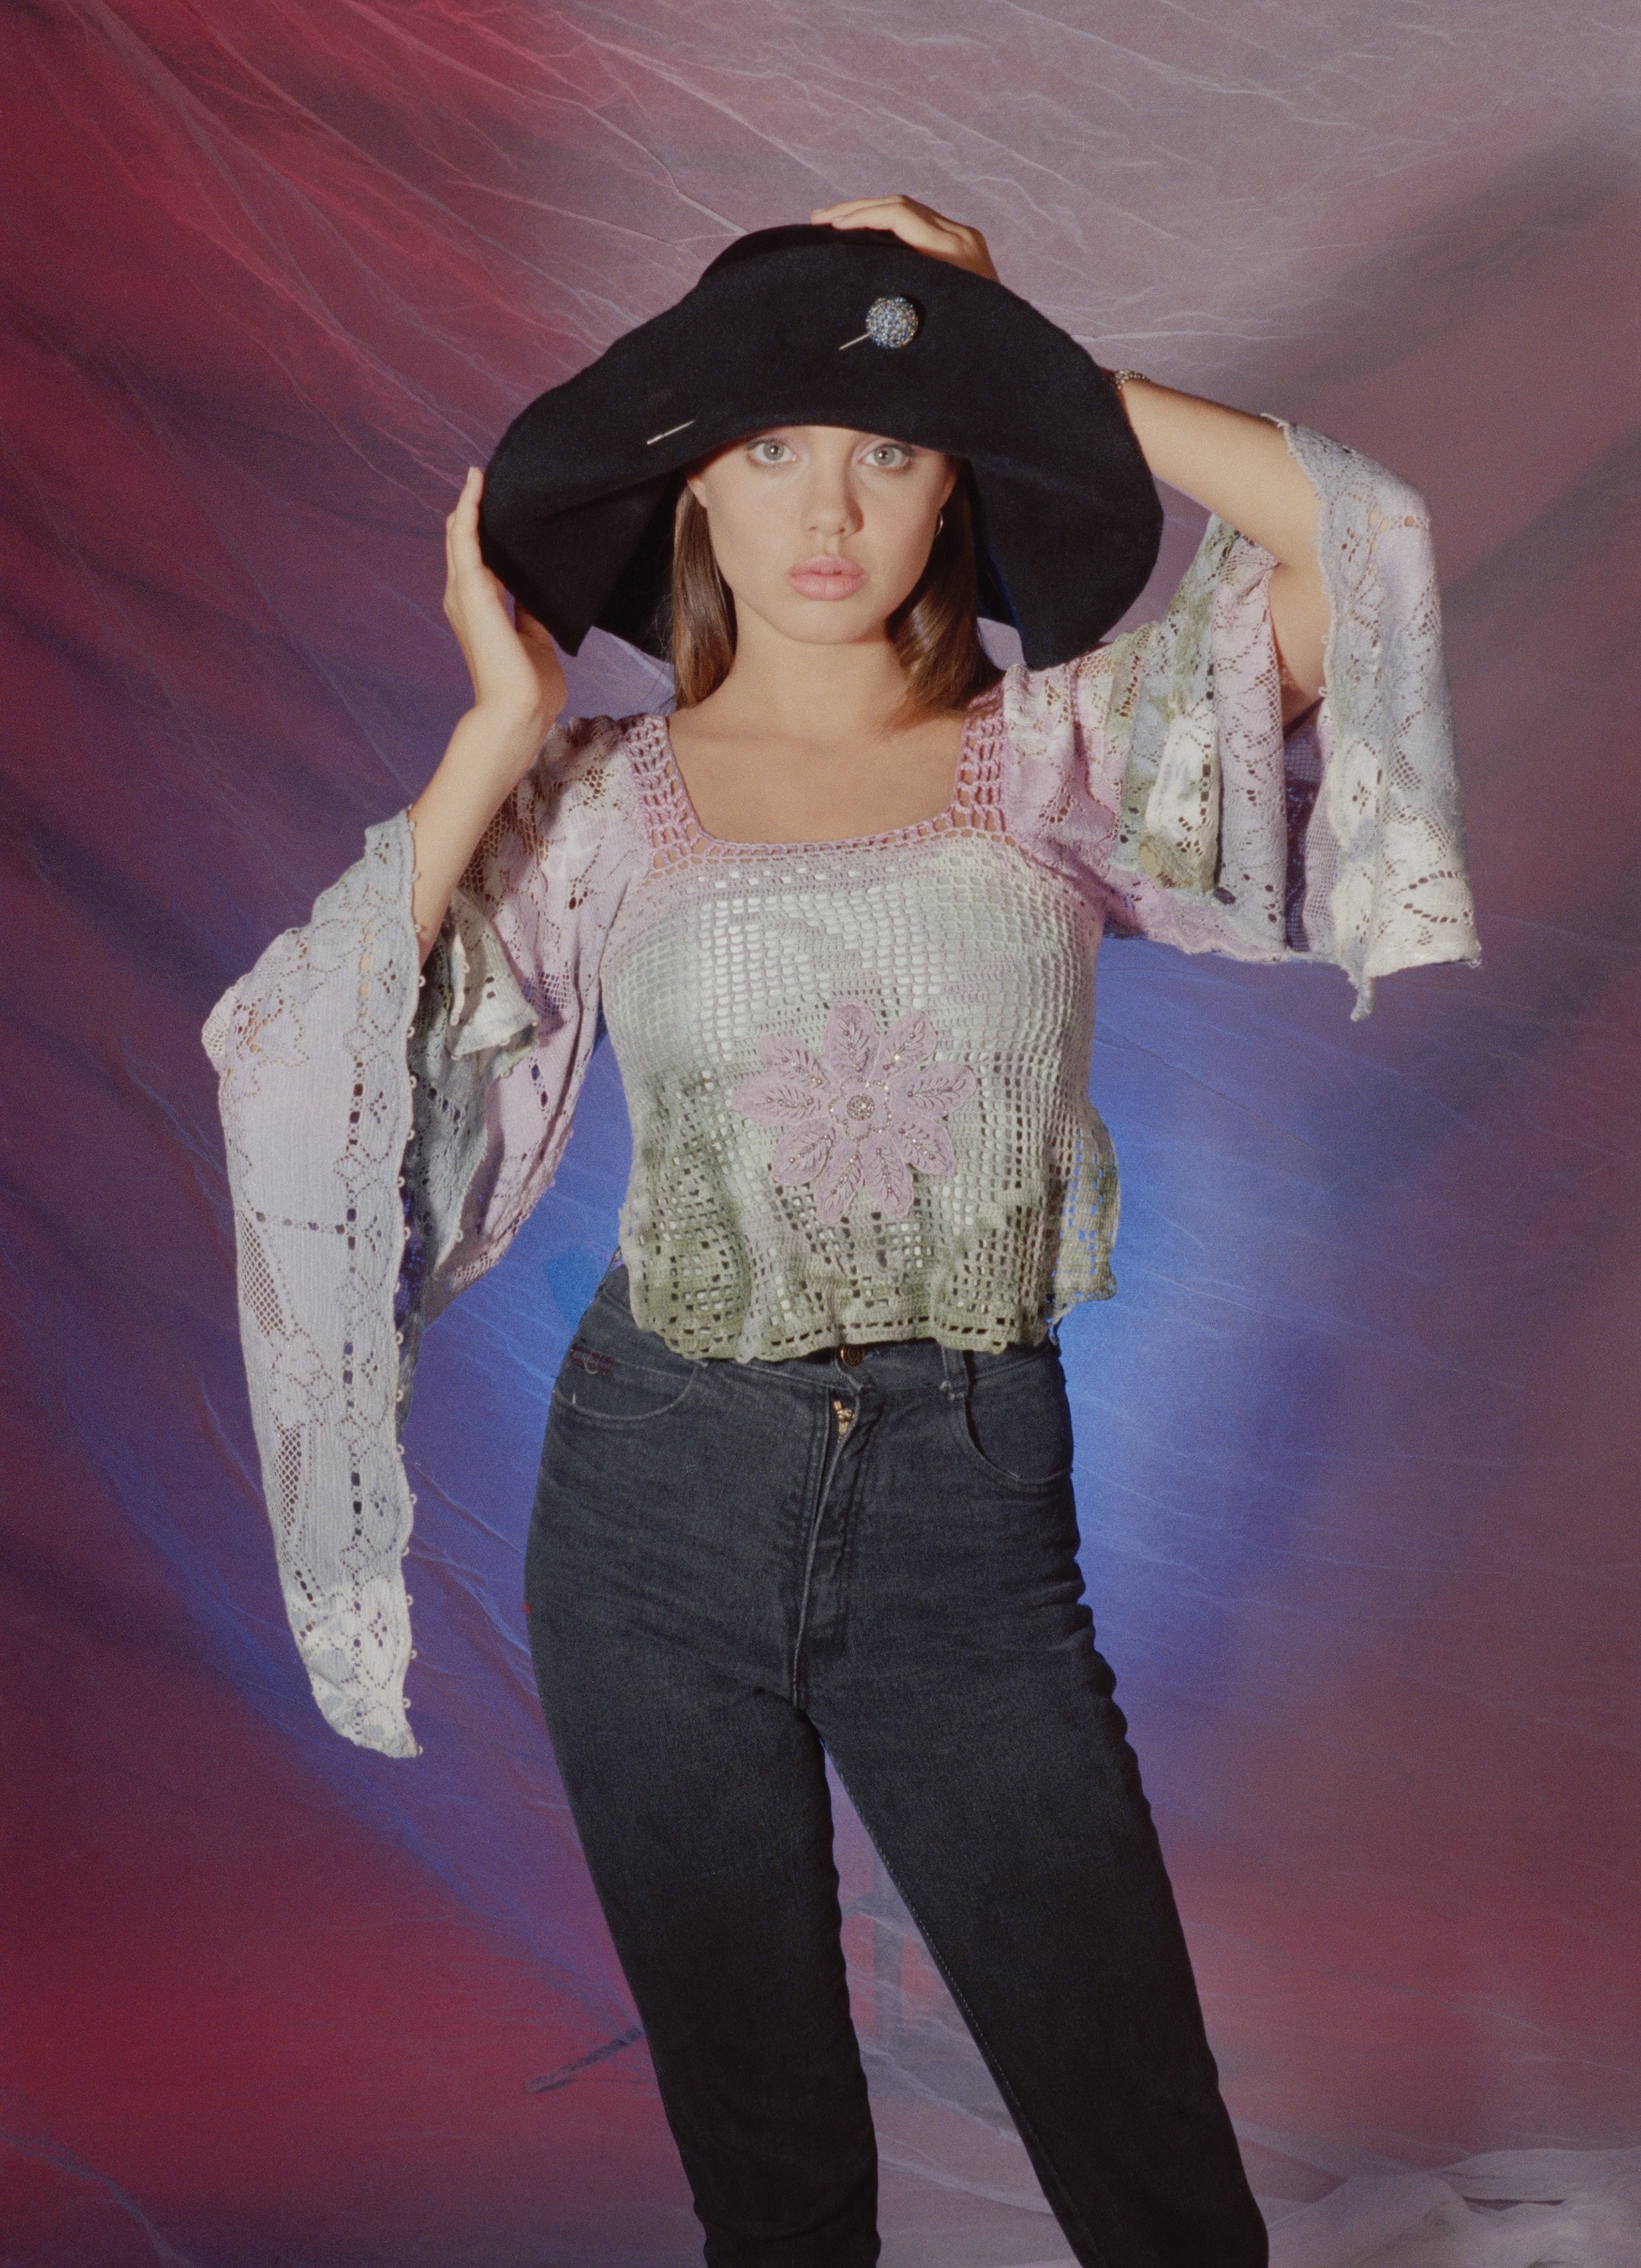 Jolie posing for a portrait in 1991